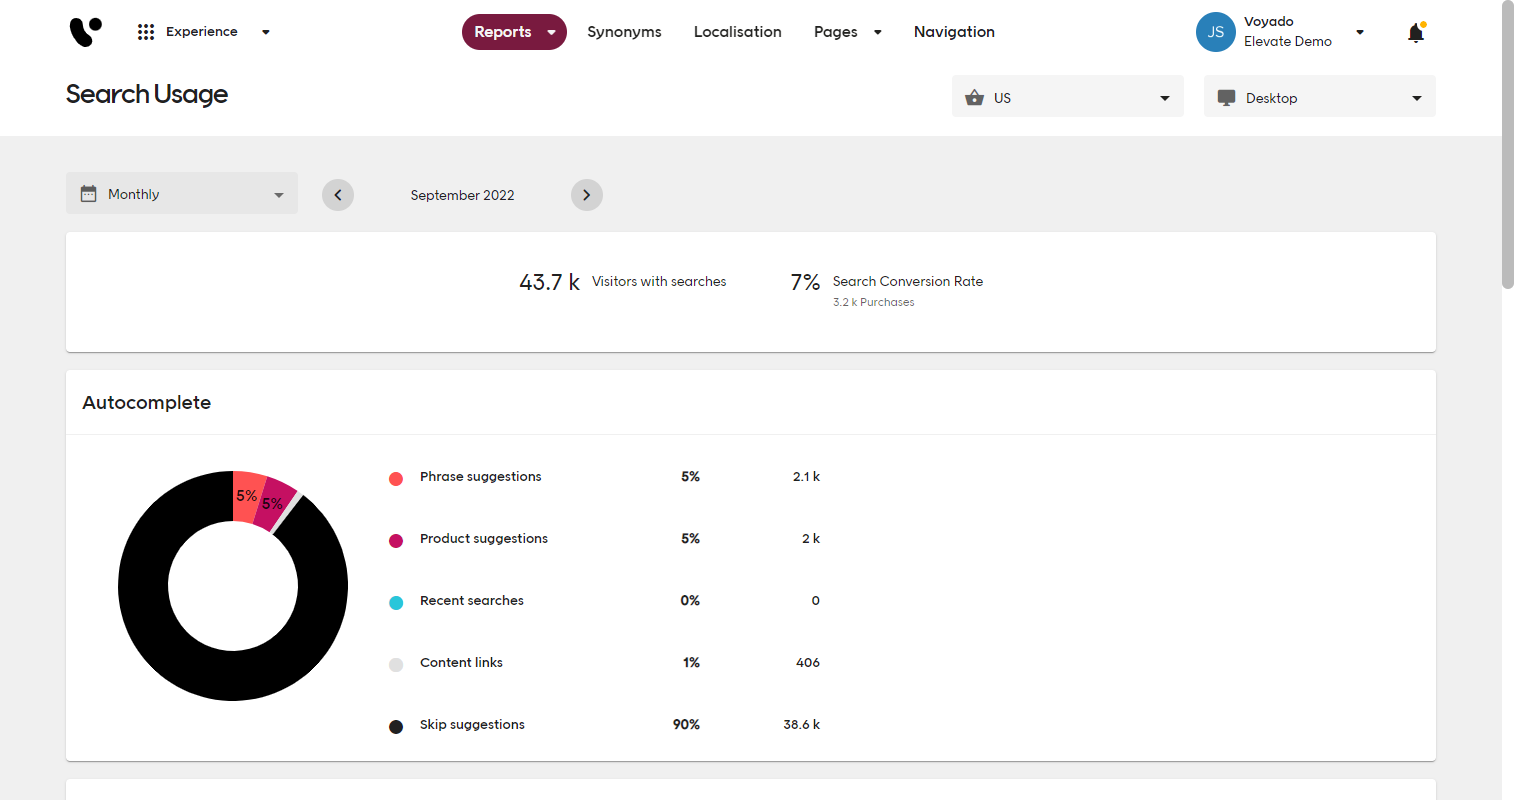 Screenshot of Voyado Elevate Experience app - Search usage report